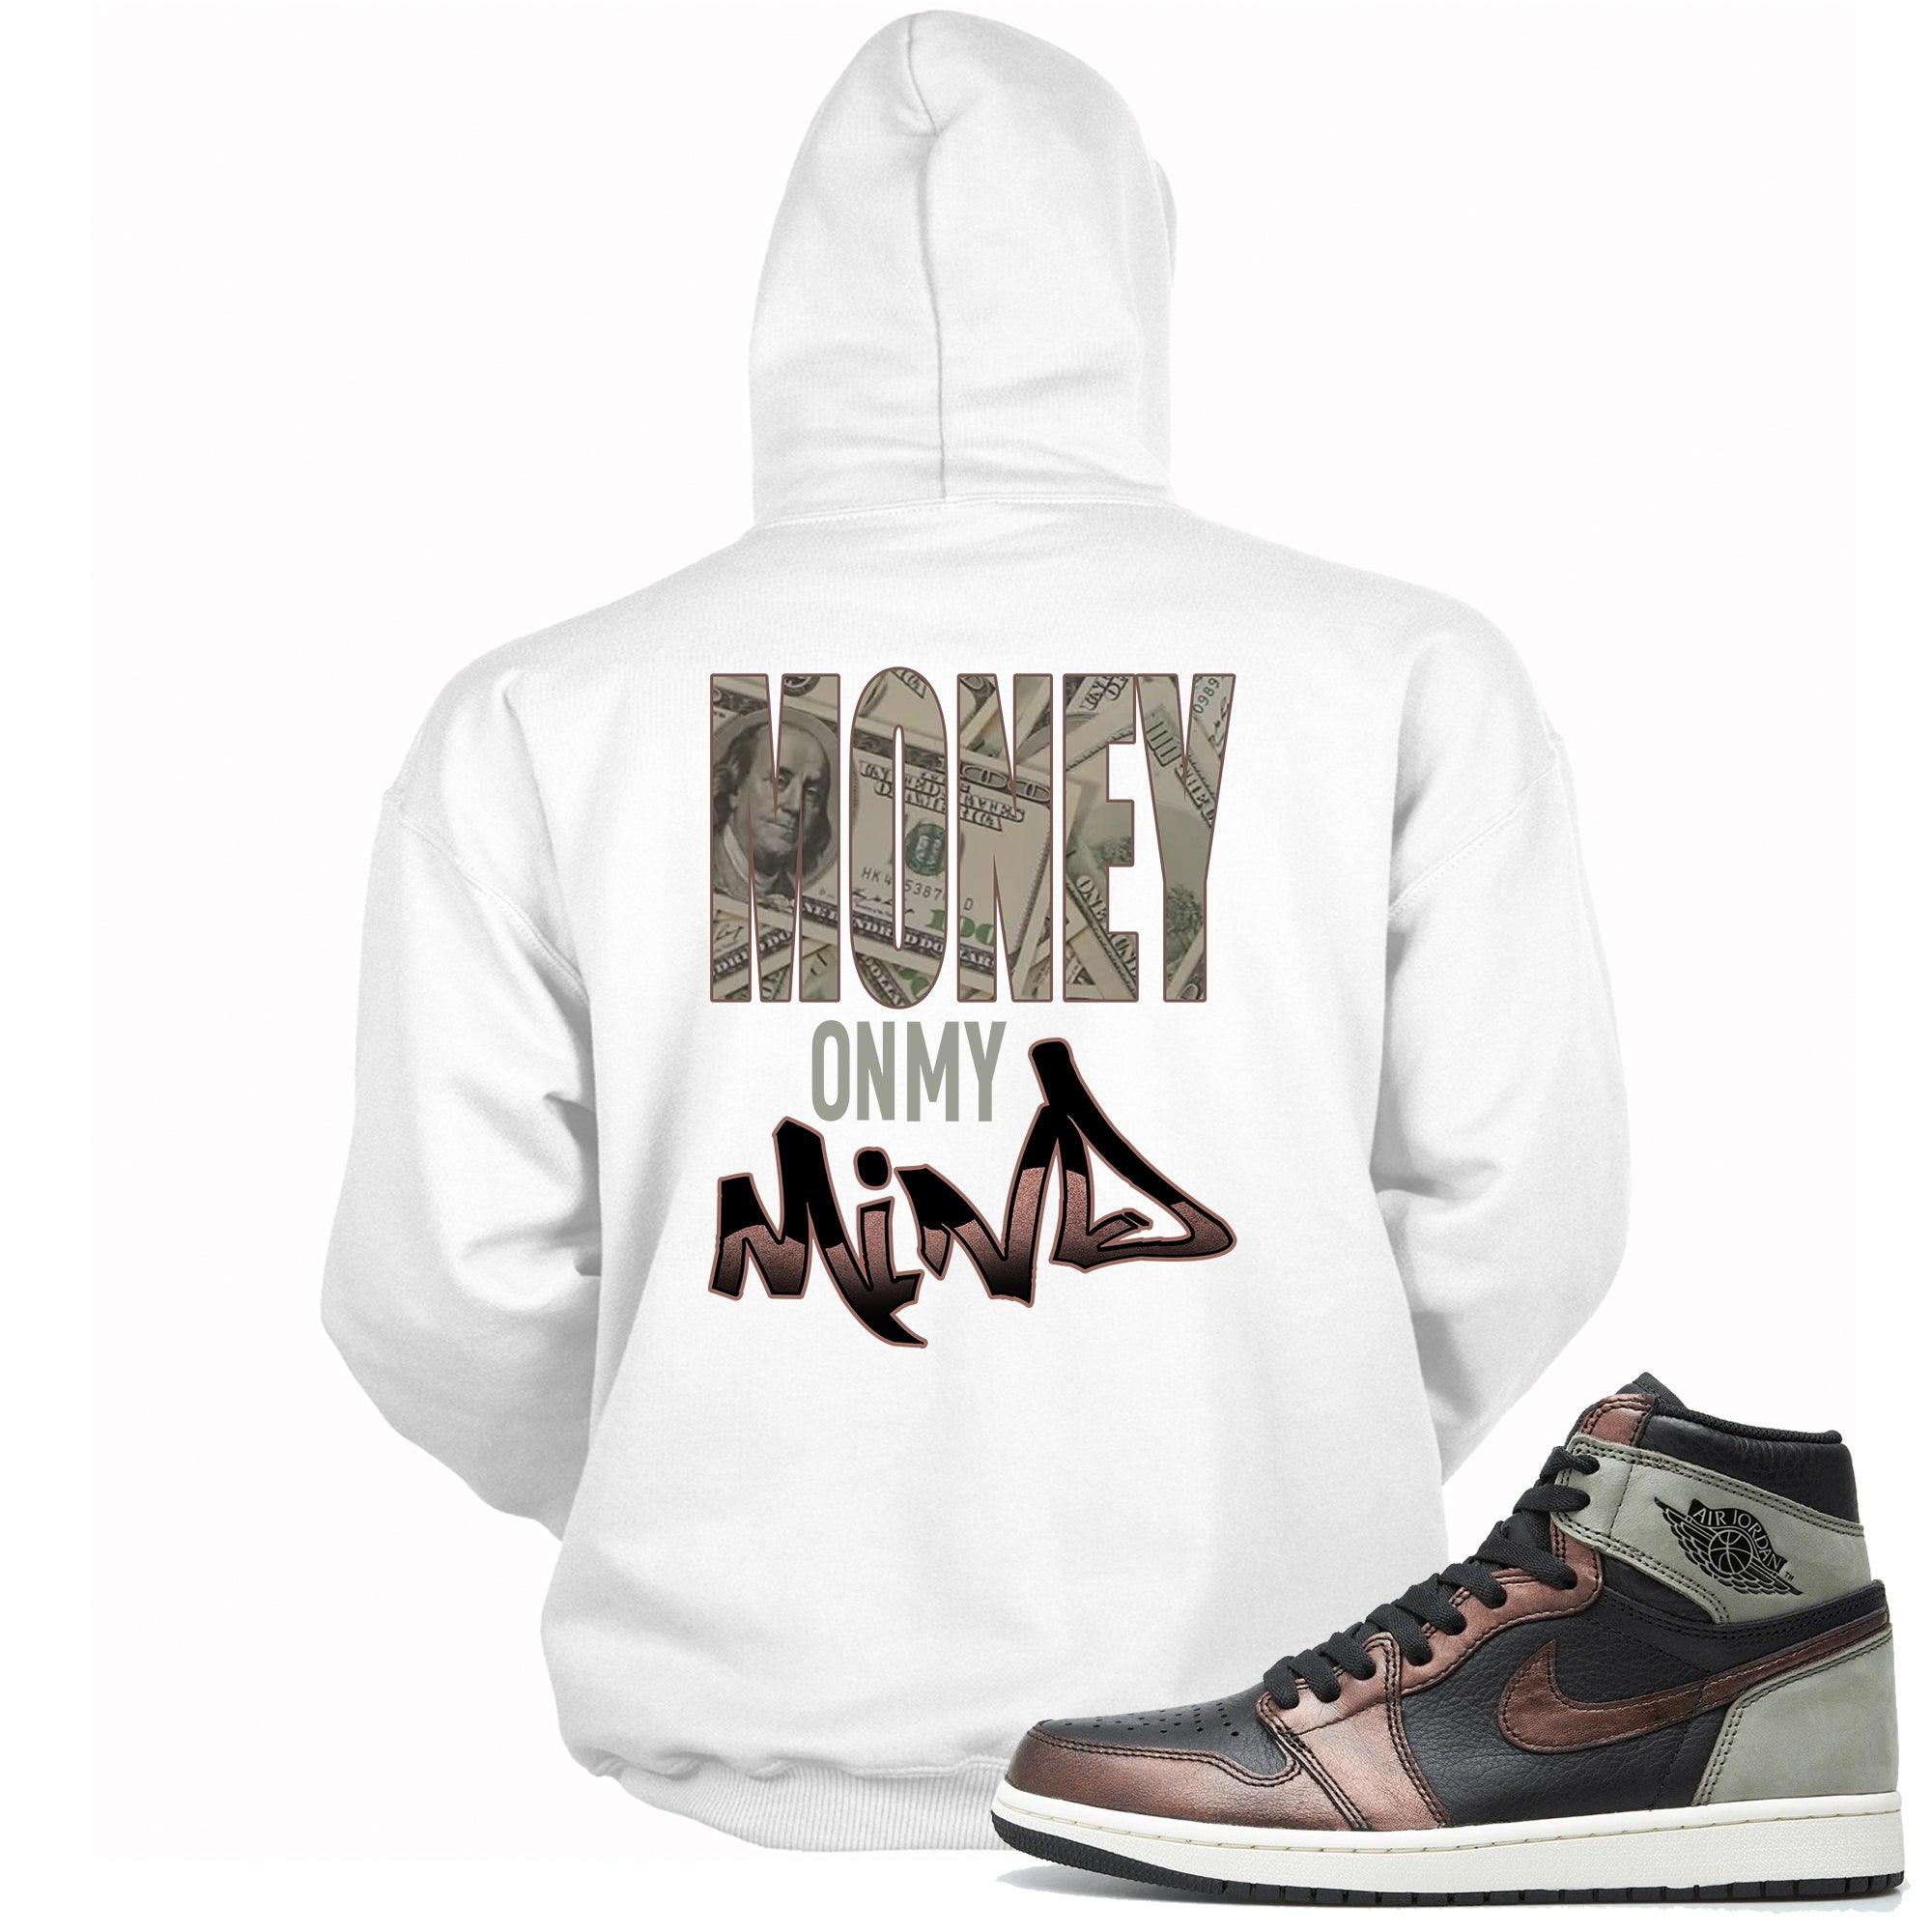 Money On My Mind Sneaker Sweatshirt AJ 1s Patina photo